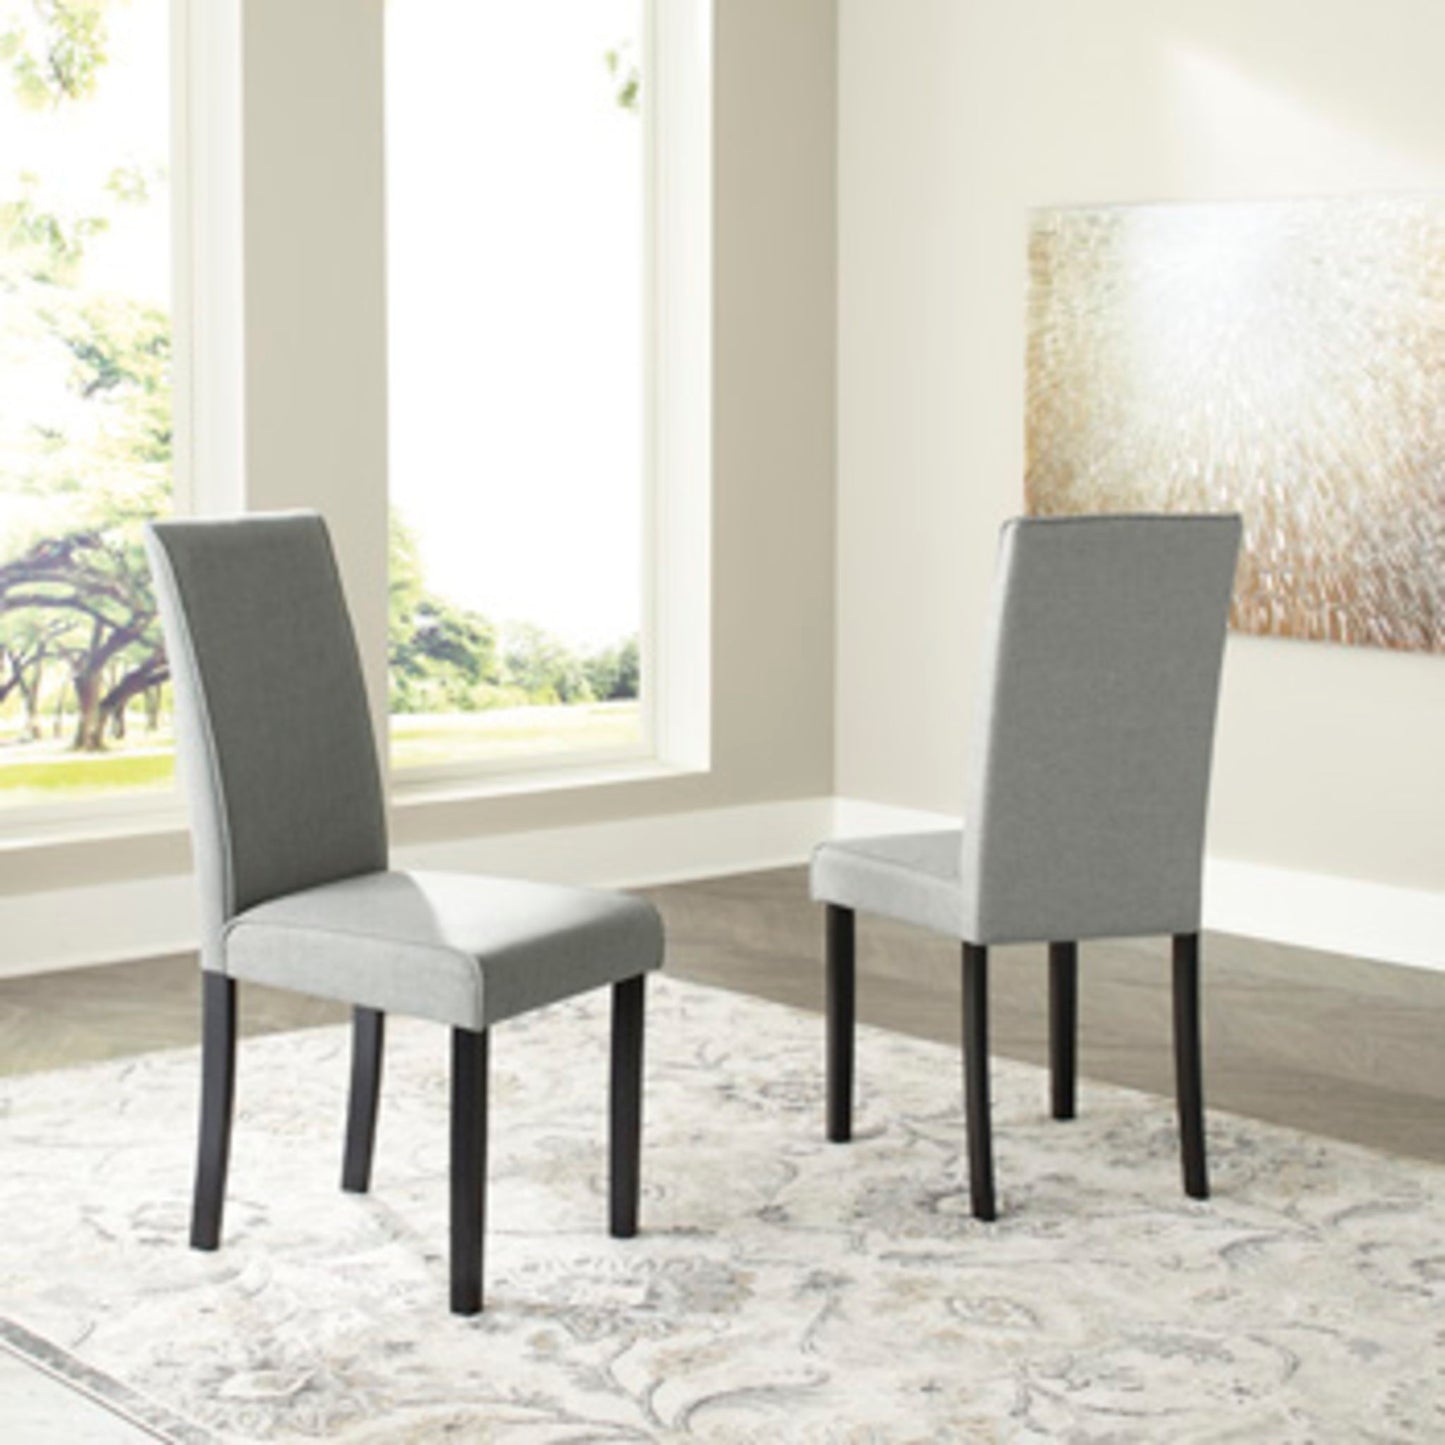 Kimonte Side Chair - Dark Brown/Gray - (D250-06)